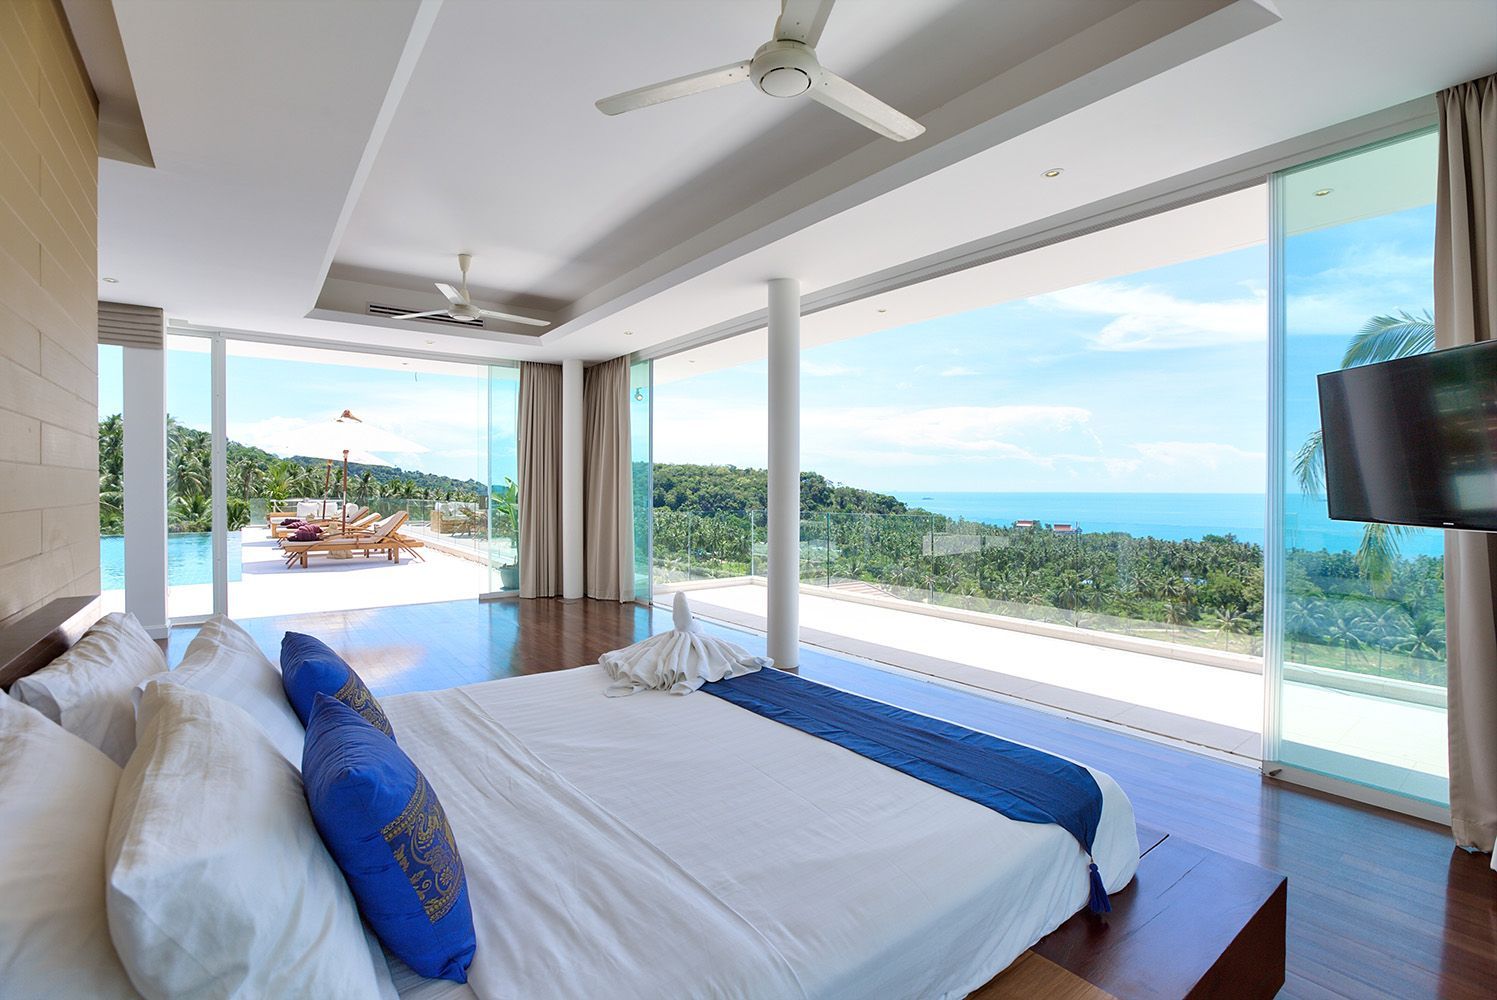 Luxurious spacious 4 bedrooms panoramic ocean views villa In Bang Por: Luxurious spacious 4 bedrooms panoramic ocean views villa In Bang Por for sale @sunwaysamui